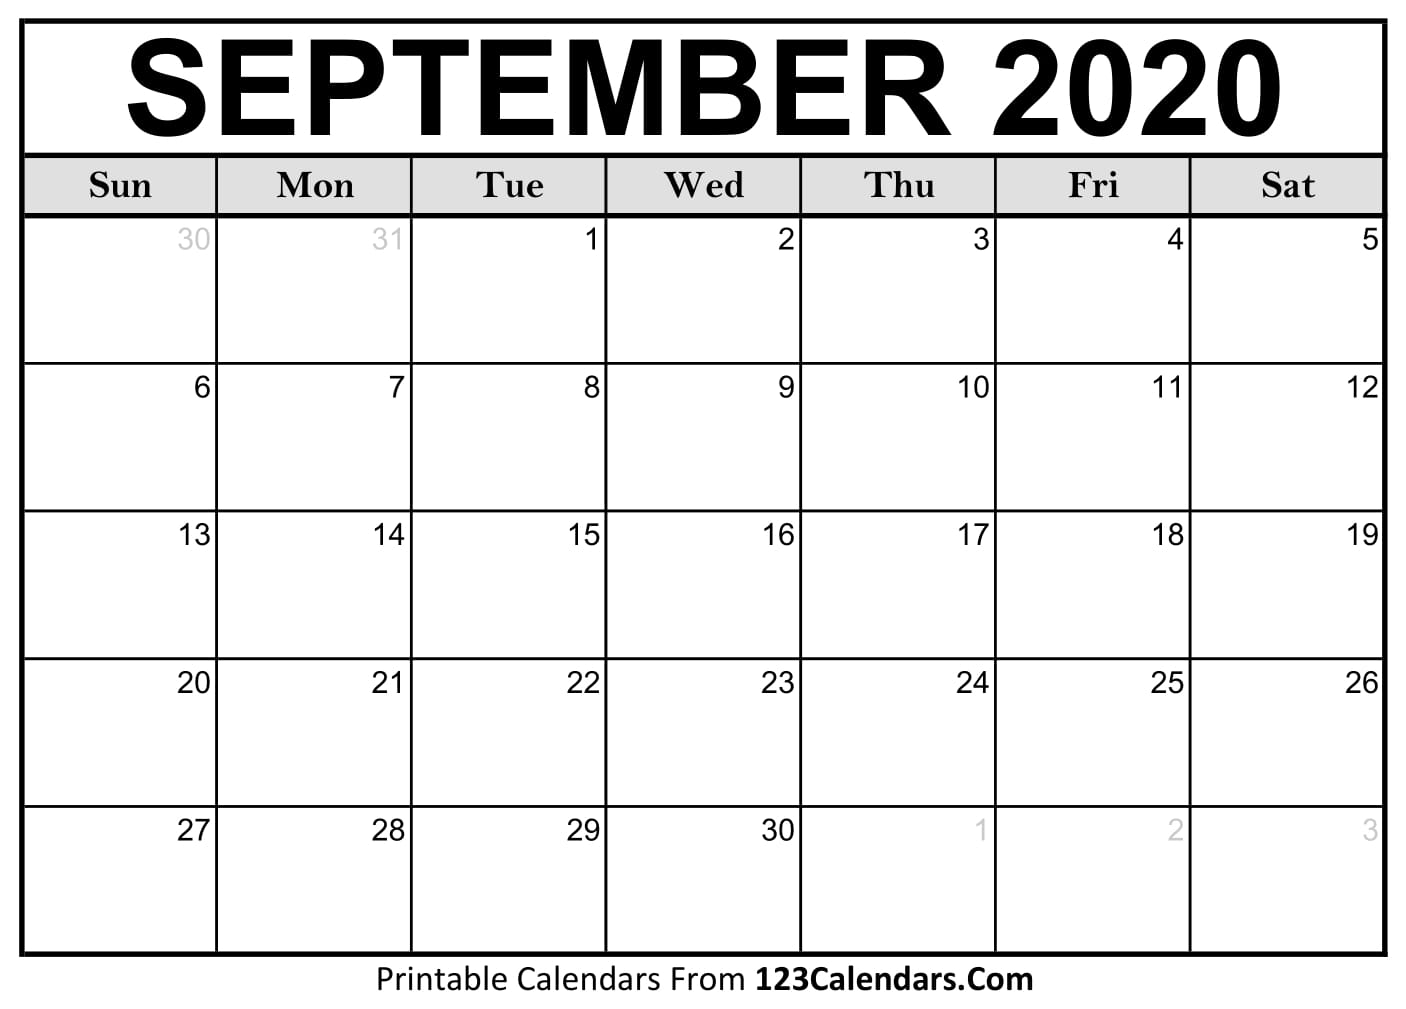 Printable September 2020 Calendar Templates 123Calendars